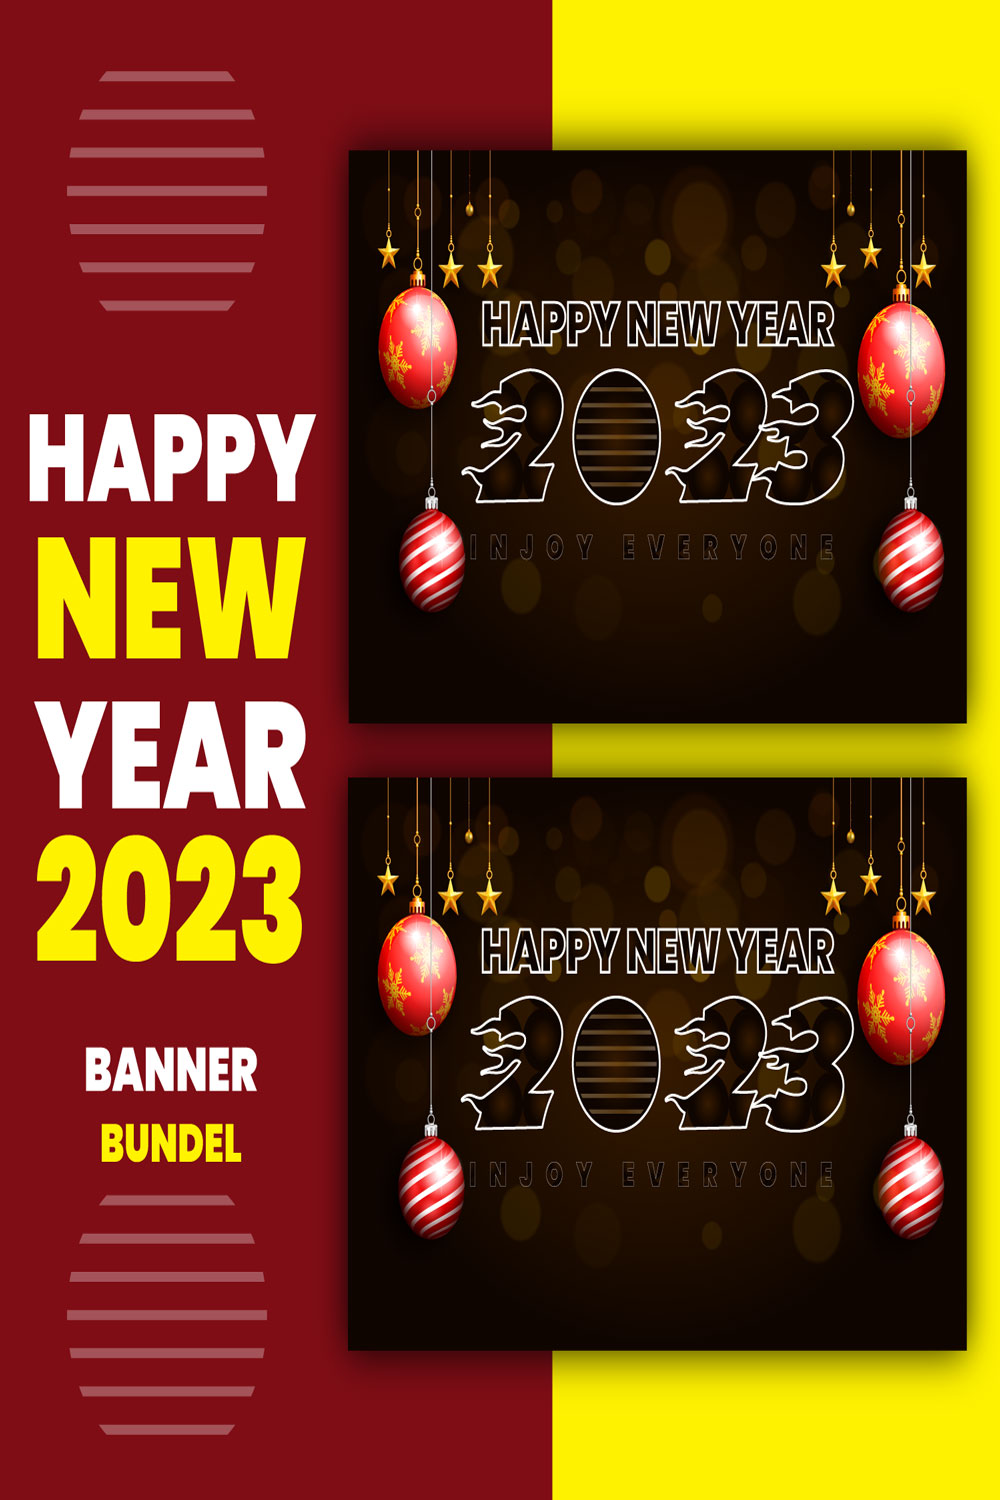 New Year Banner Design pinterest image.